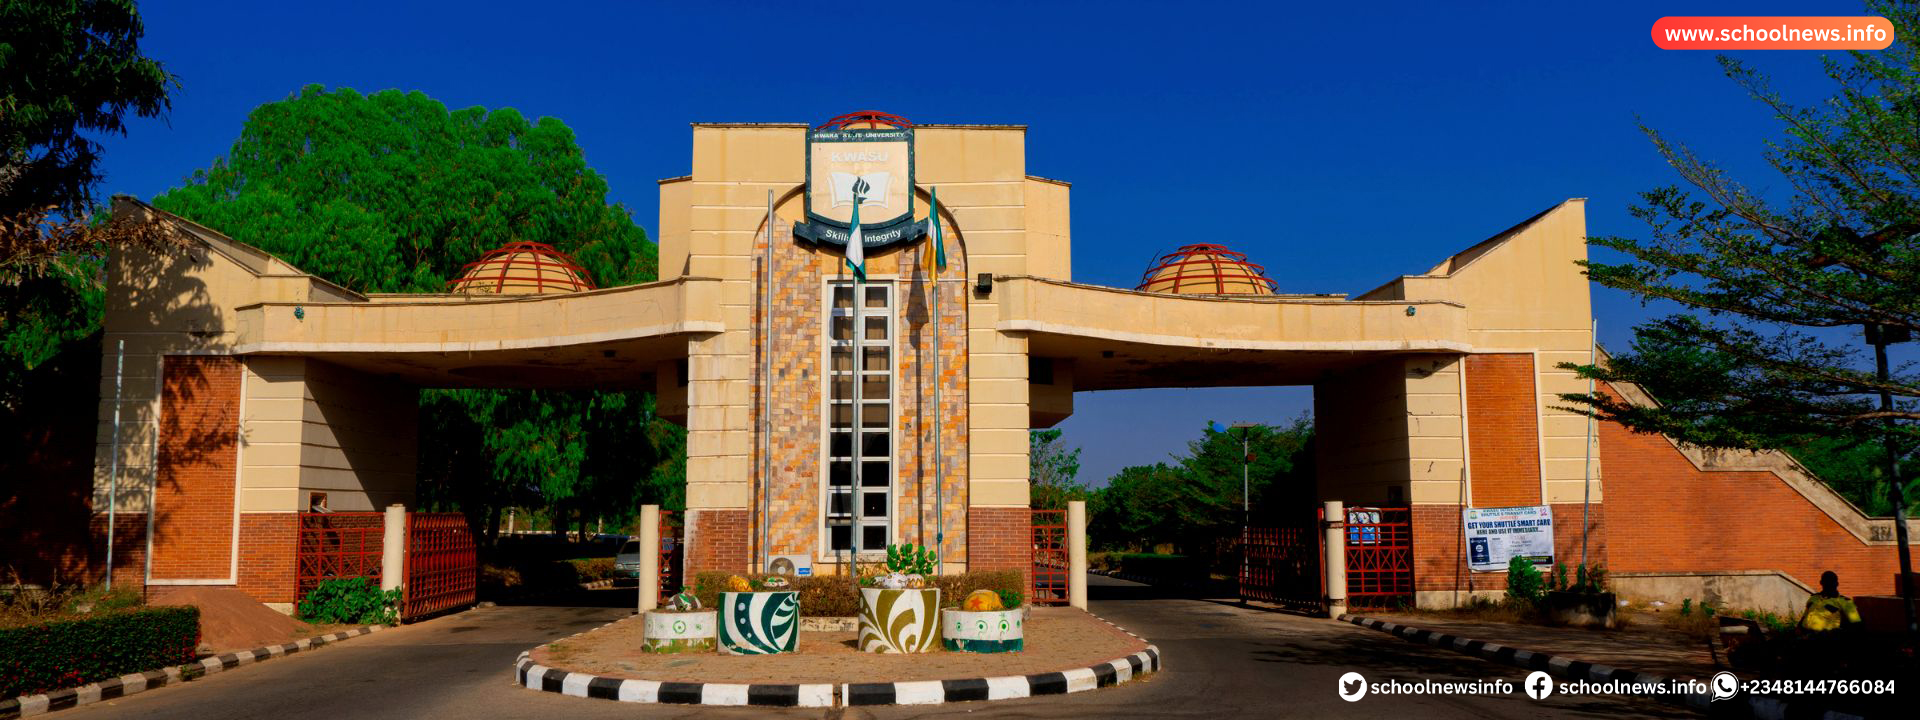 Kware State University School News